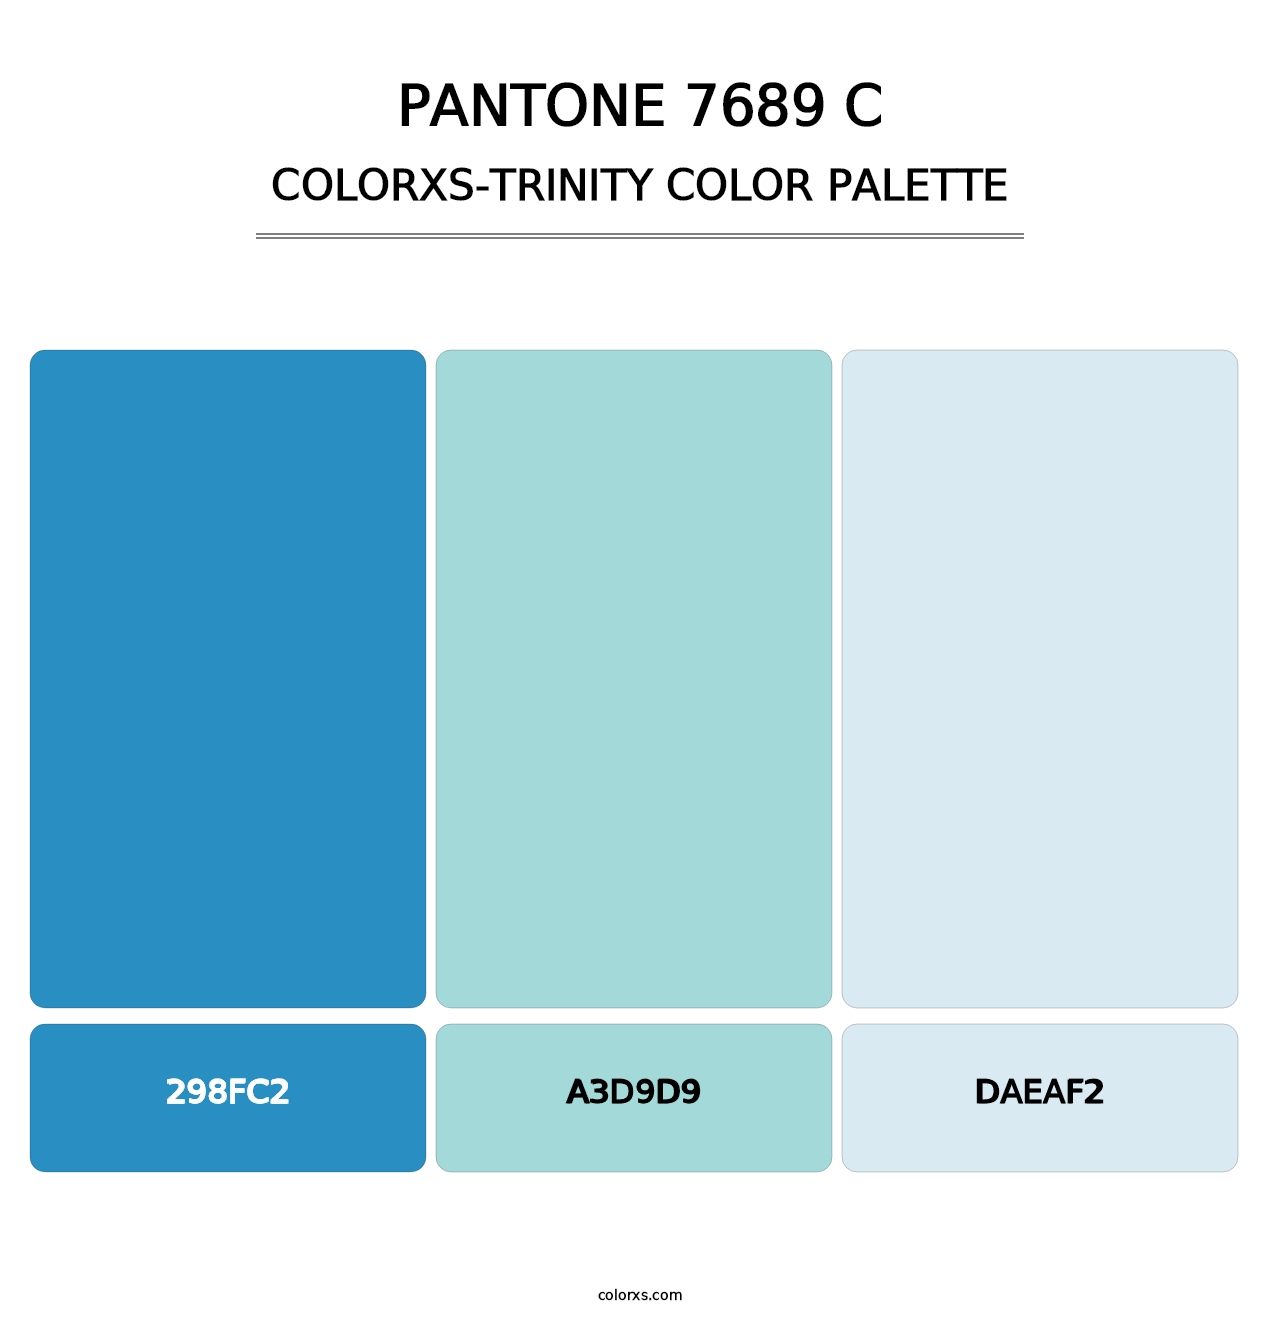 PANTONE 7689 C - Colorxs Trinity Palette